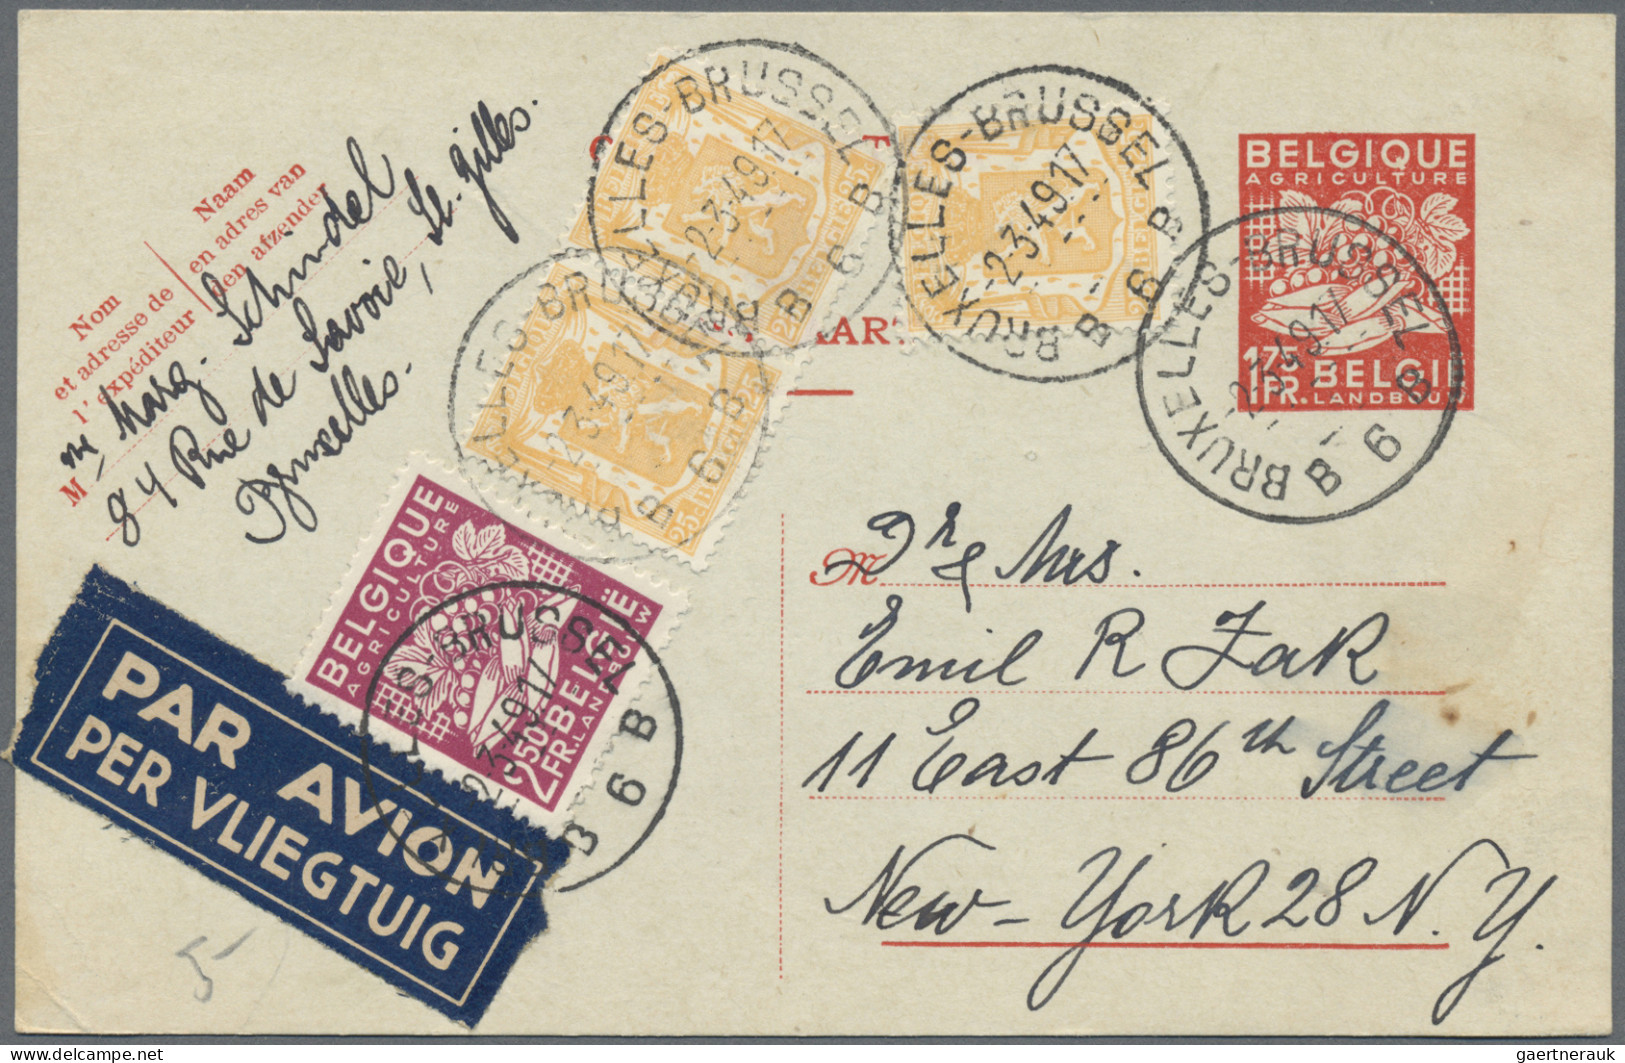 Belgium - postal stationery: 1871/1980 (ca.), balance of apprx. 170 used/unused